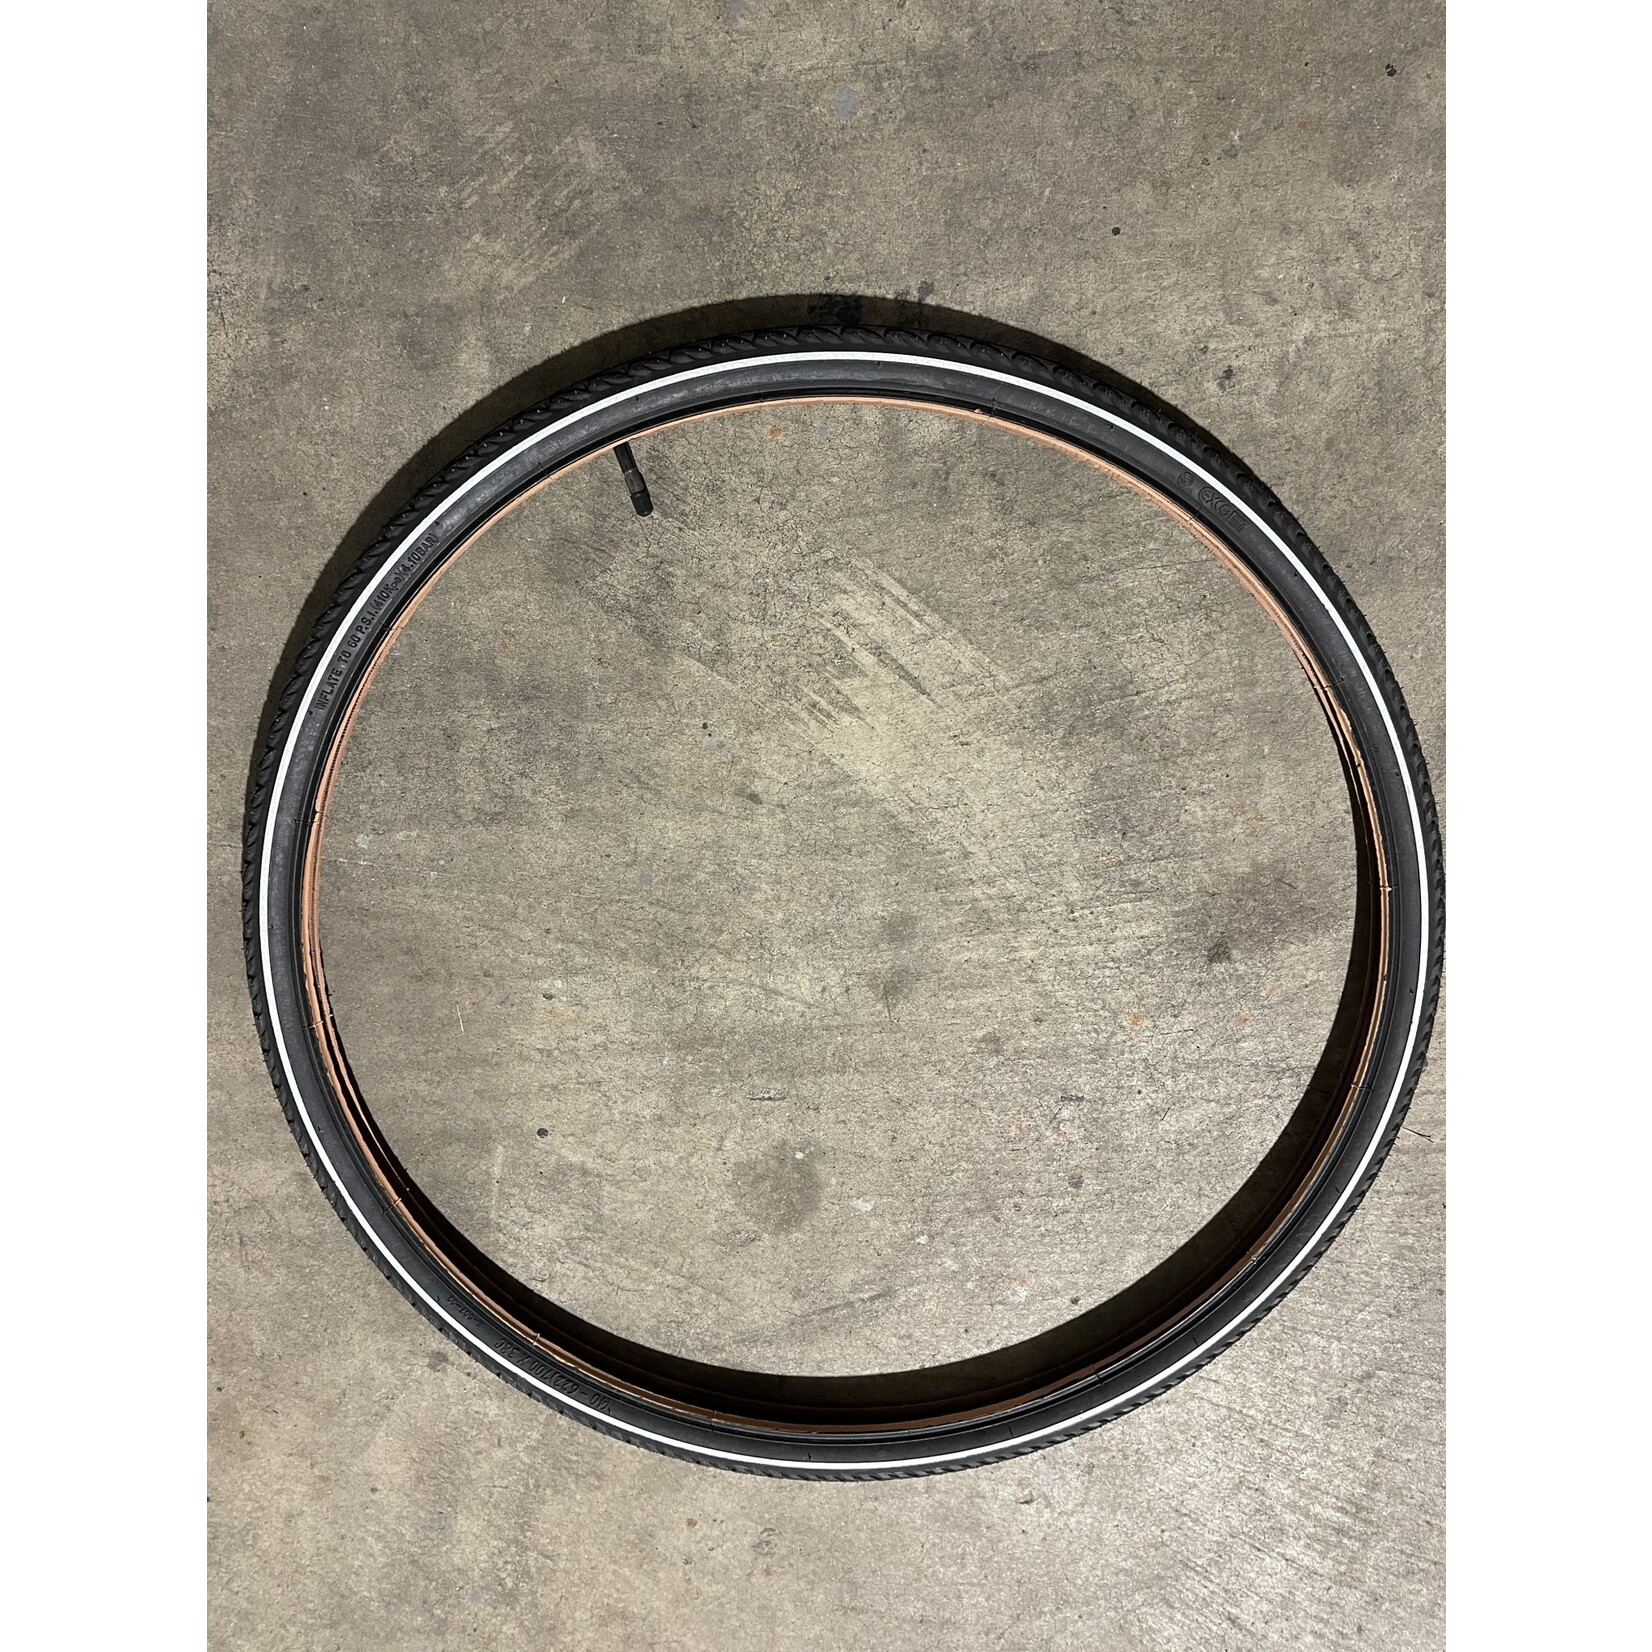 Bulk 700 X 38 Bicycle Tire & Tube (Black w/ White Pinstripe)